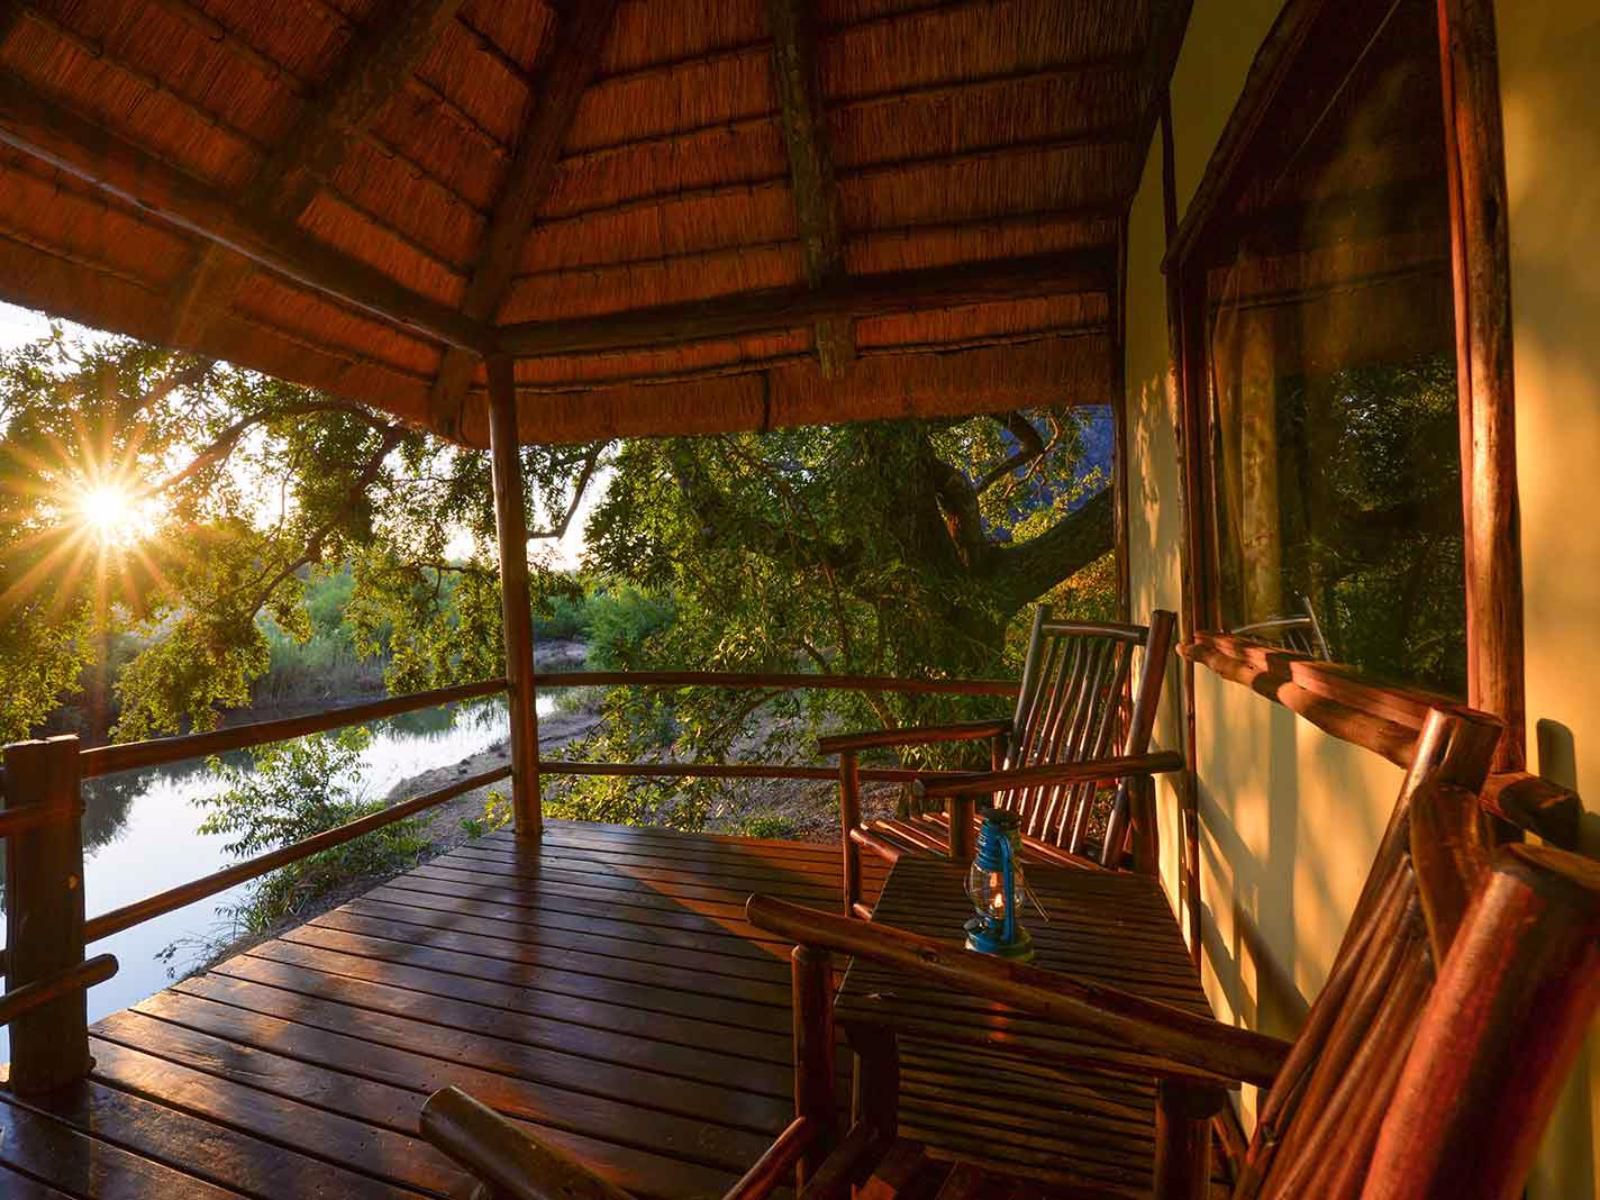 Klaserie River Safari Lodge Hoedspruit Limpopo Province South Africa Colorful